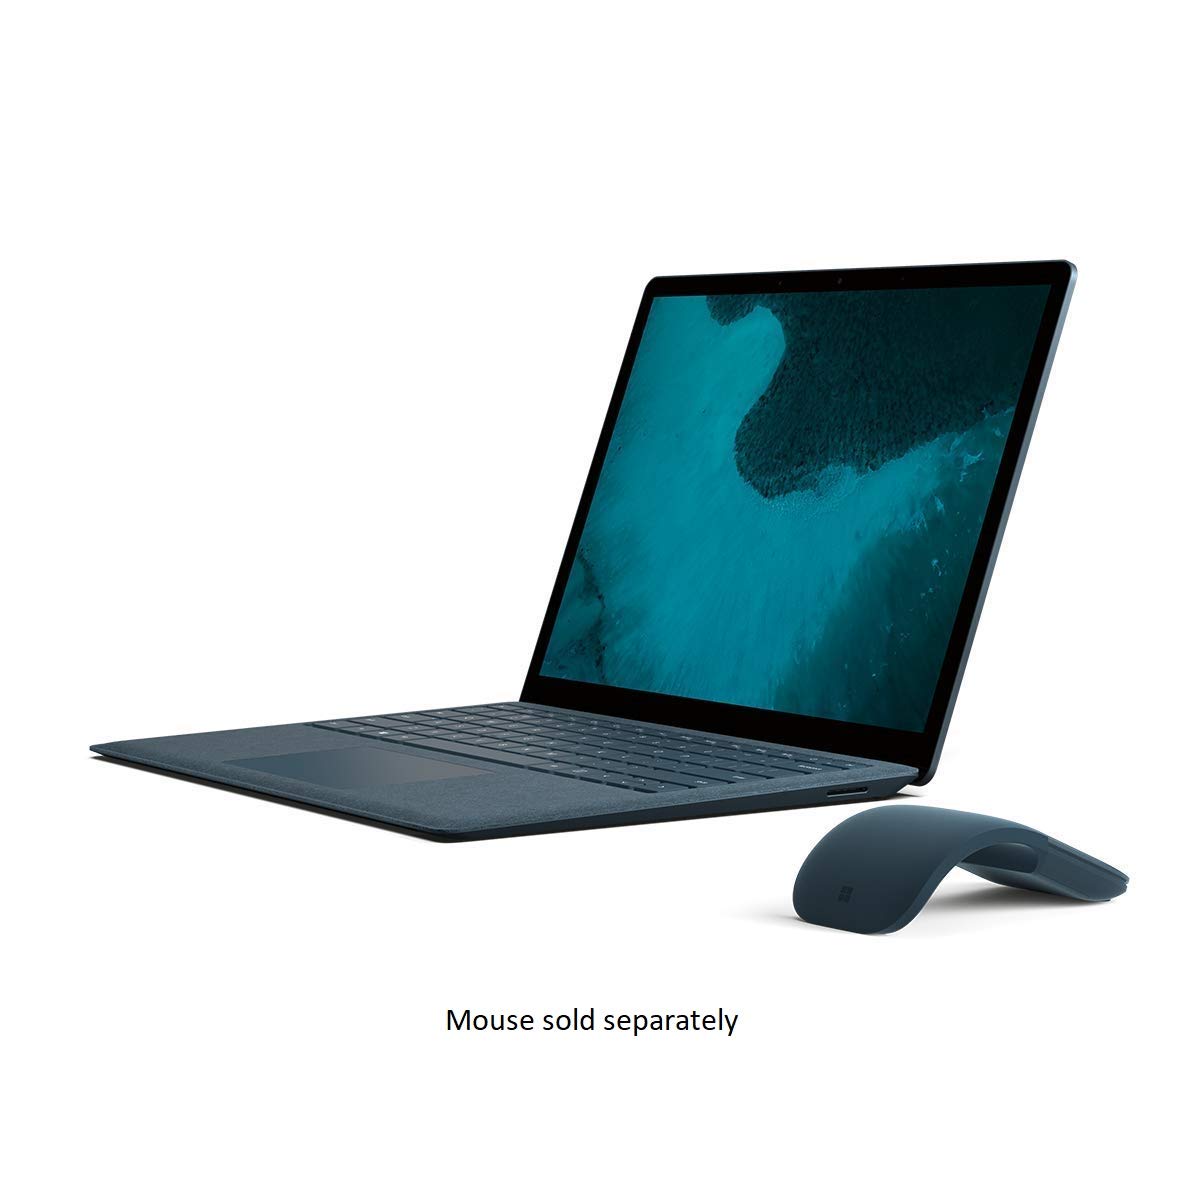 Microsoft Surface Laptop 2 13.5 Inch Laptop - (Cobalt Blue) (Intel 8th Gen Core i7, 8 GB RAM, 256 GB SSD, Intel UHD Graphics 620, Windows 10 Home)